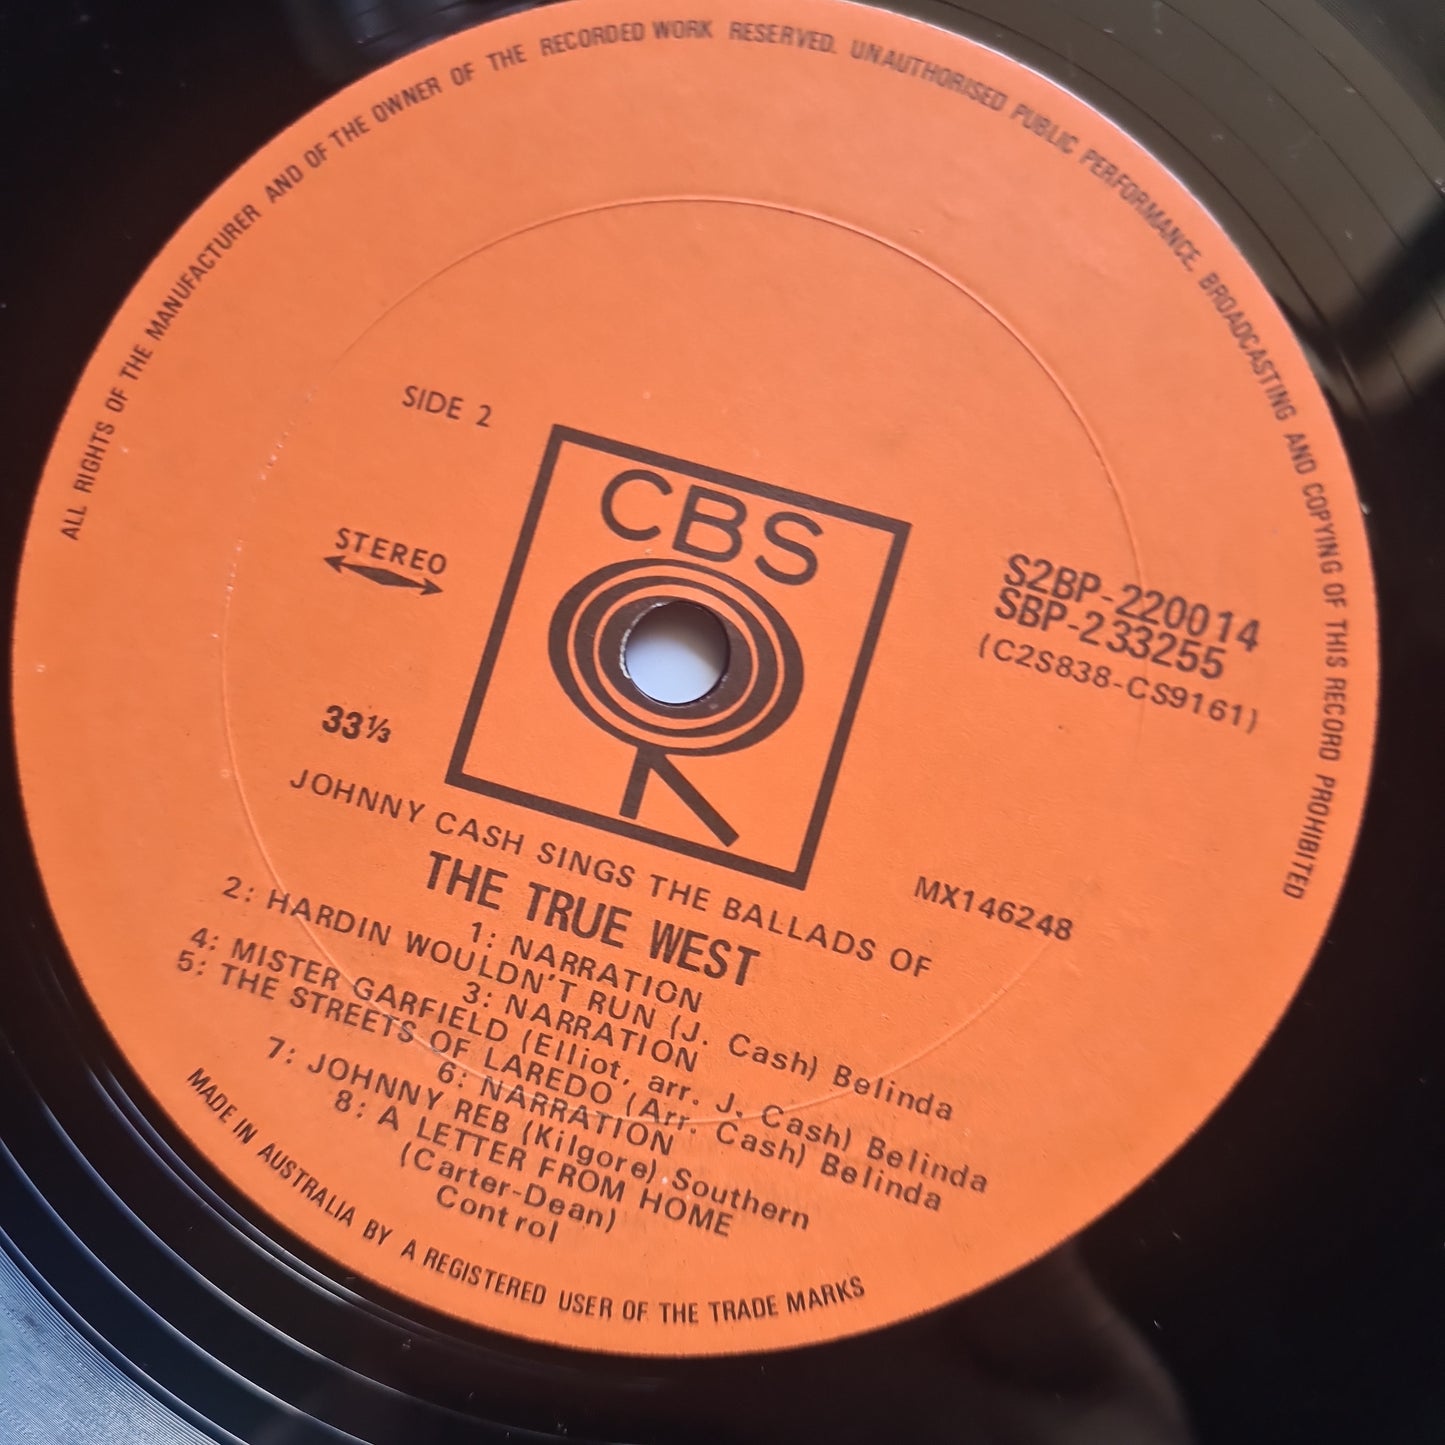 Johnny Cash – Johnny Cash Sings The Ballads Of The True West - 1965 - Vinyl Record (2LP Gatefold)